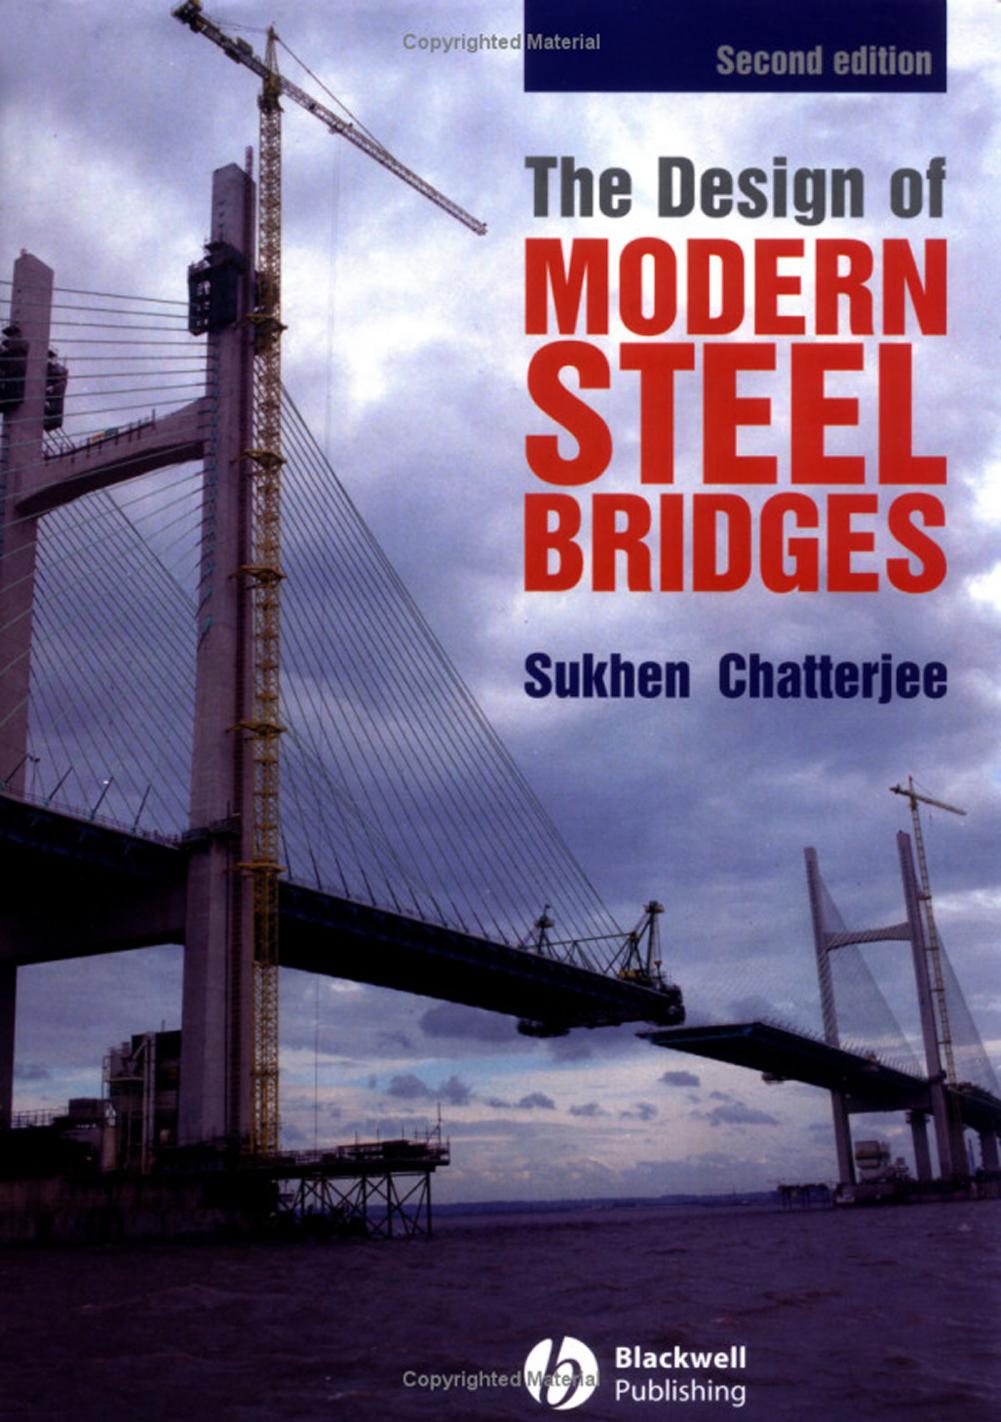 The Design of Modern Steel Bridges